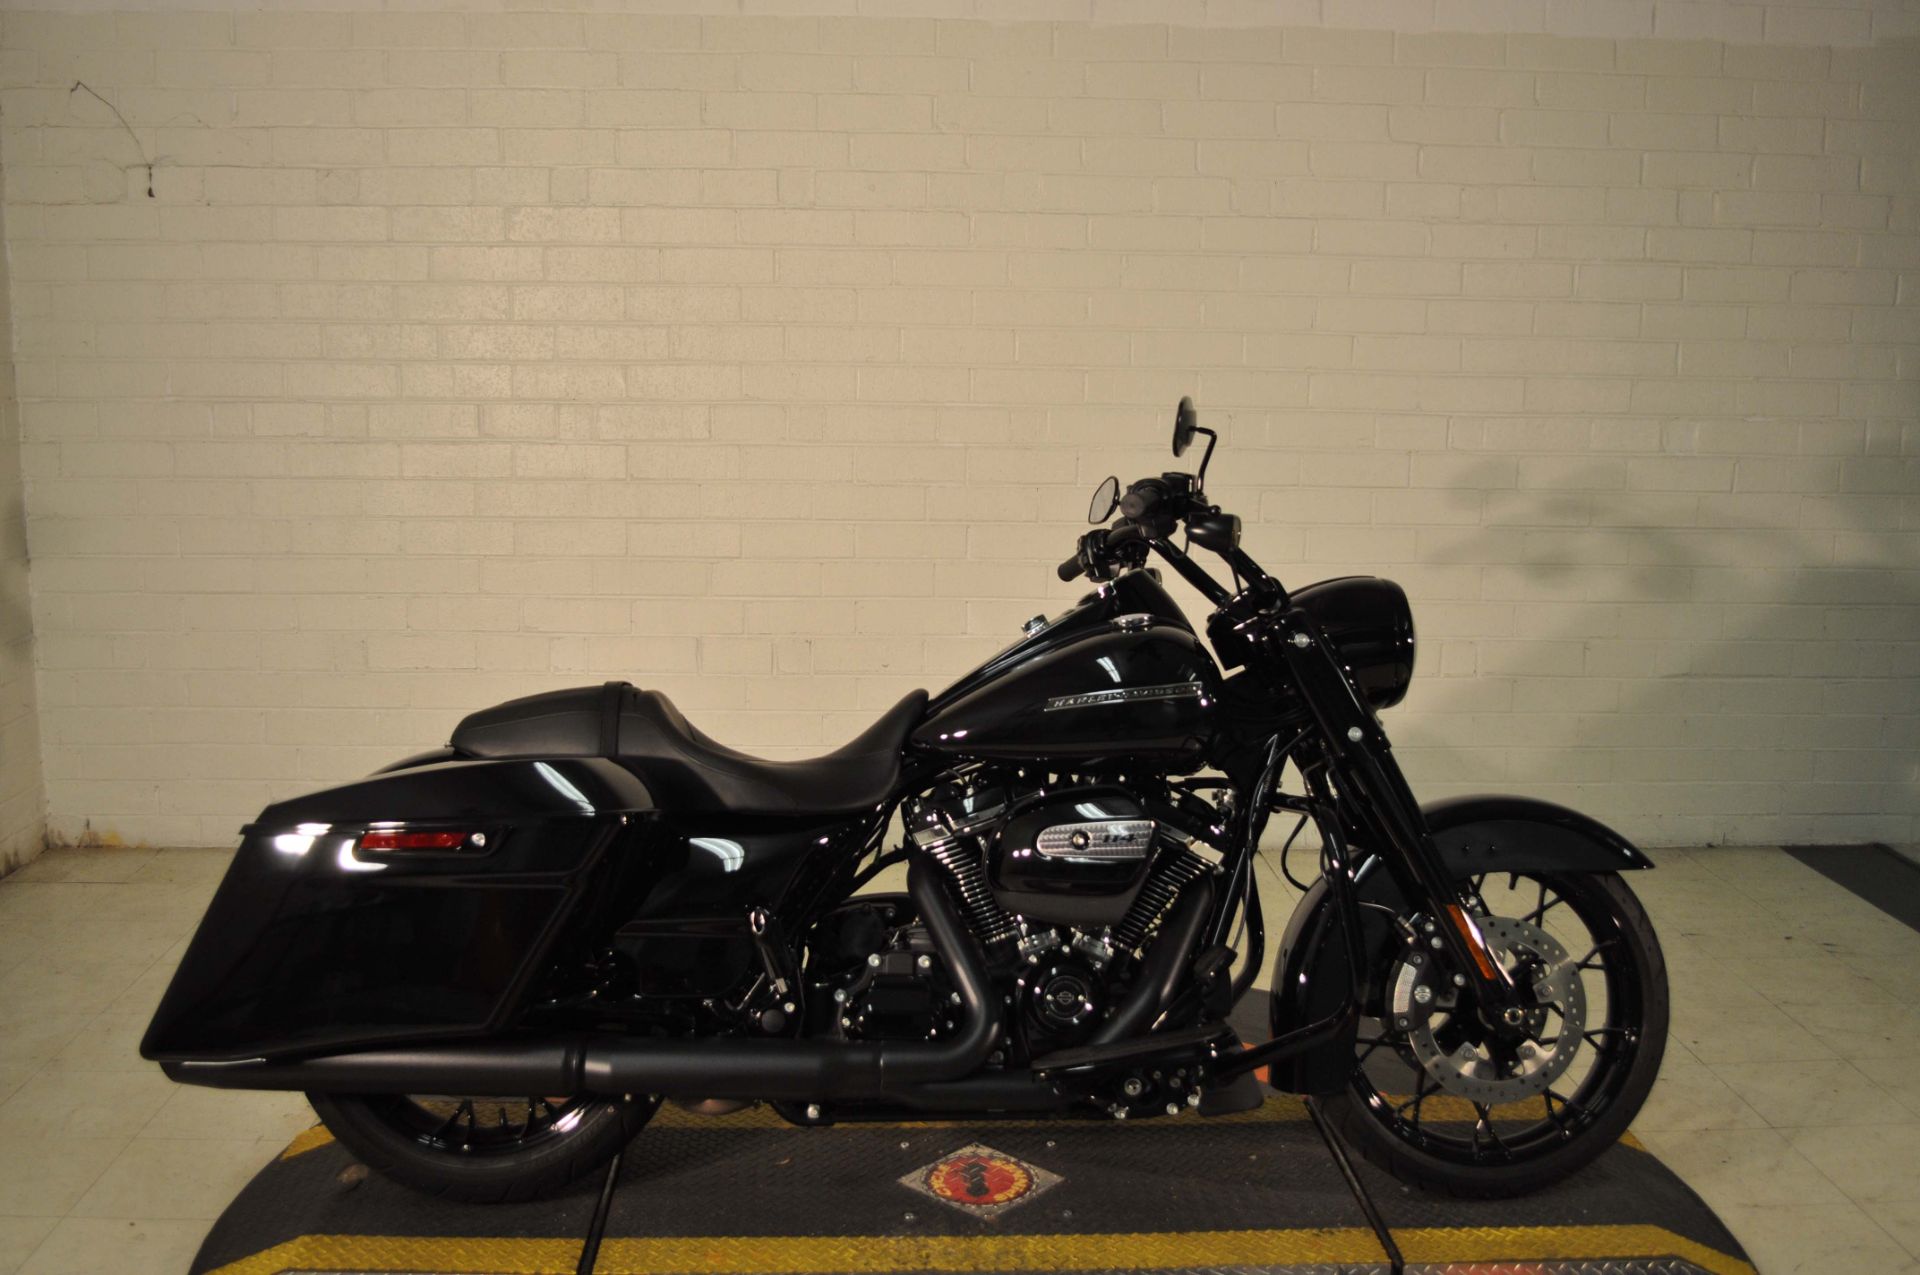 2020 Harley-Davidson Road King® Special in Winston Salem, North Carolina - Photo 1